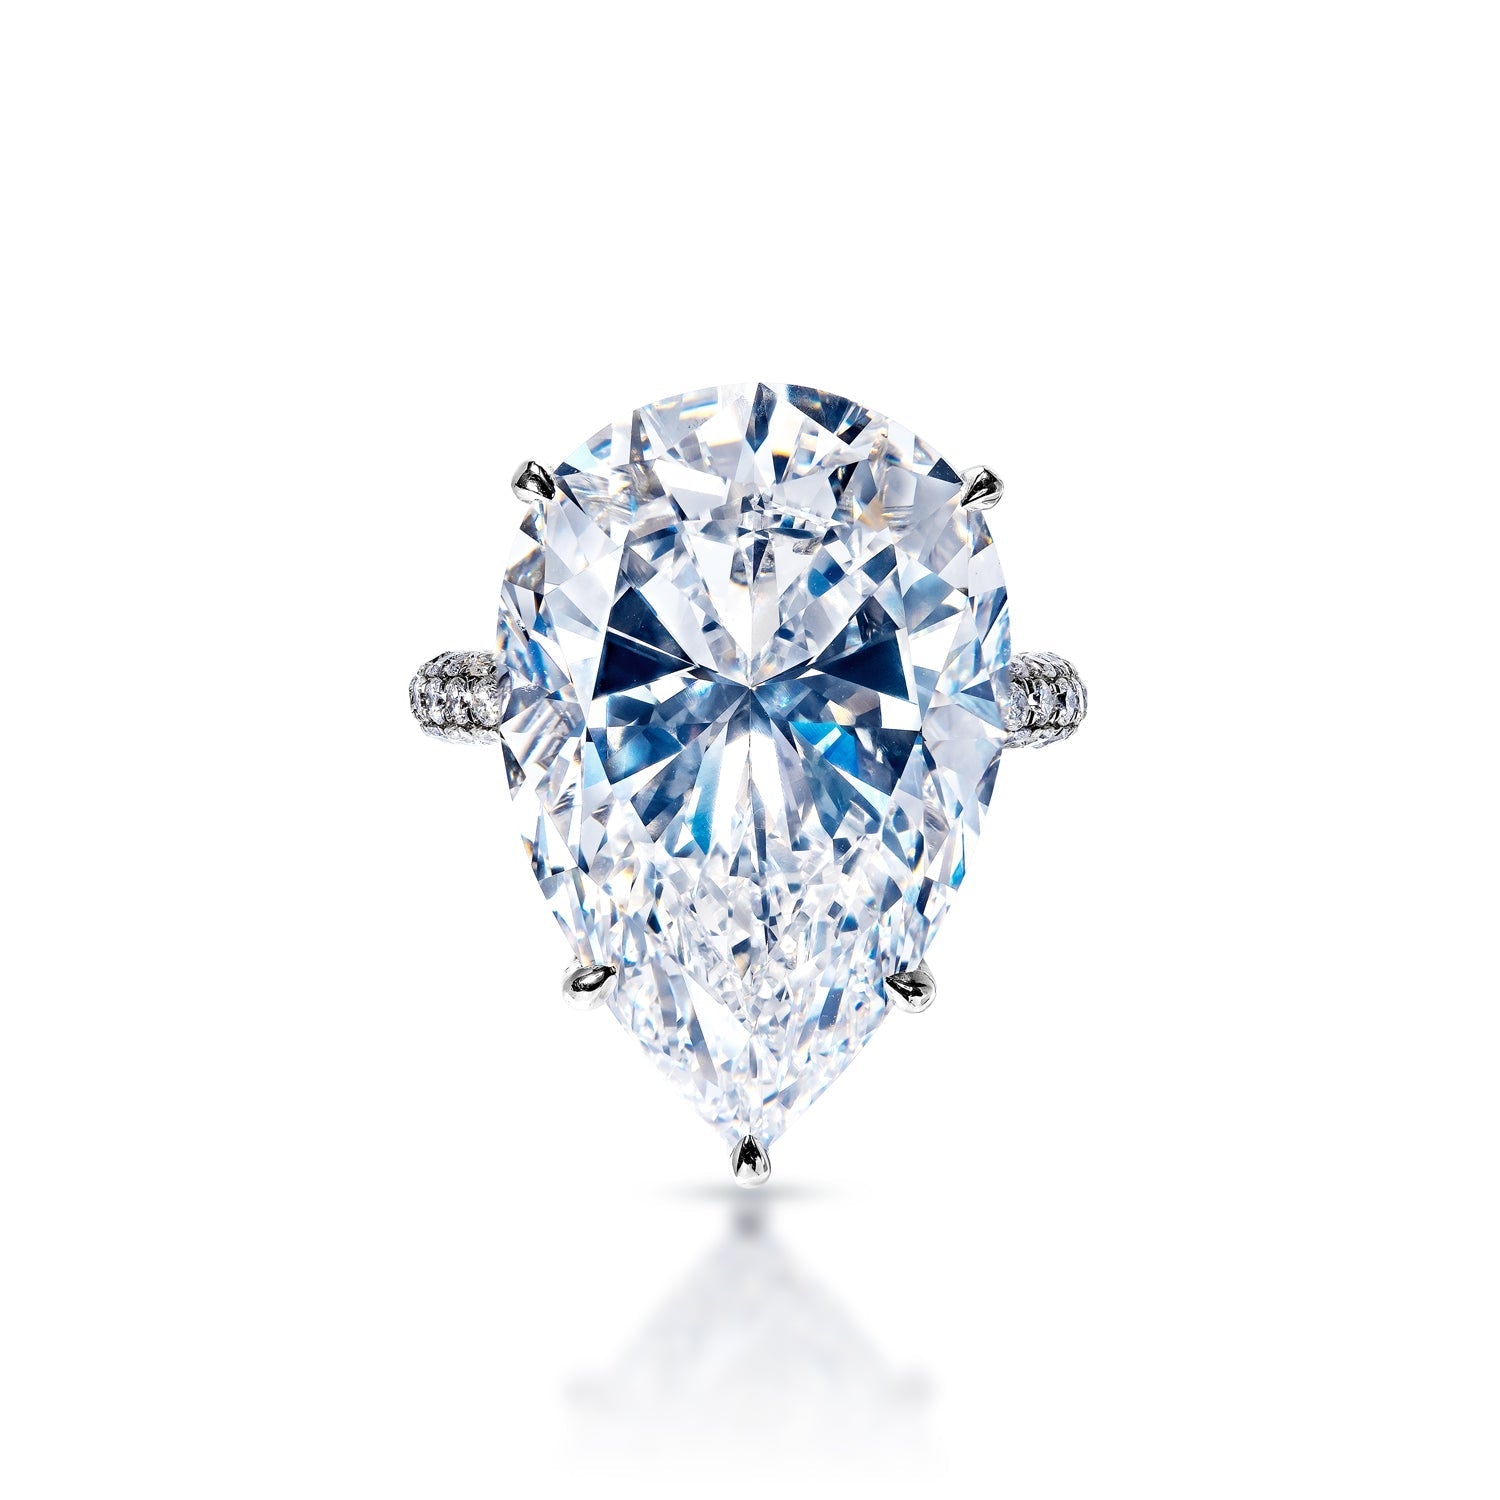 Why Nekta New York's Valeria 24 Carat F VVS2 Pear Shape Diamond Should be Your Engagement Ring